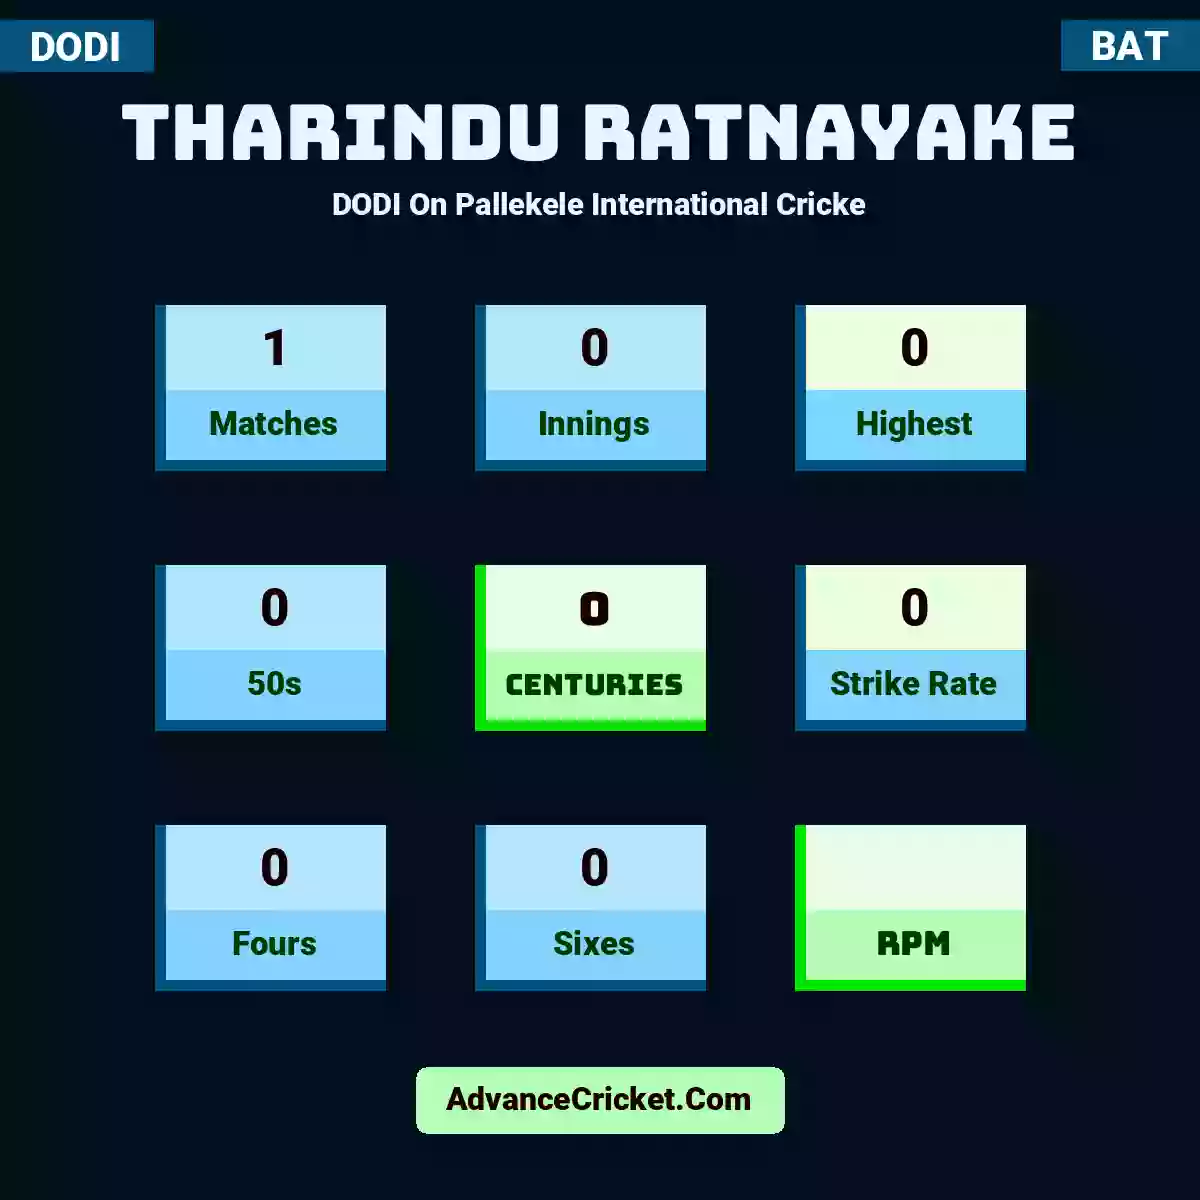 Tharindu Ratnayake DODI  On Pallekele International Cricke, Tharindu Ratnayake played 1 matches, scored 0 runs as highest, 0 half-centuries, and 0 centuries, with a strike rate of 0. T.Ratnayake hit 0 fours and 0 sixes.